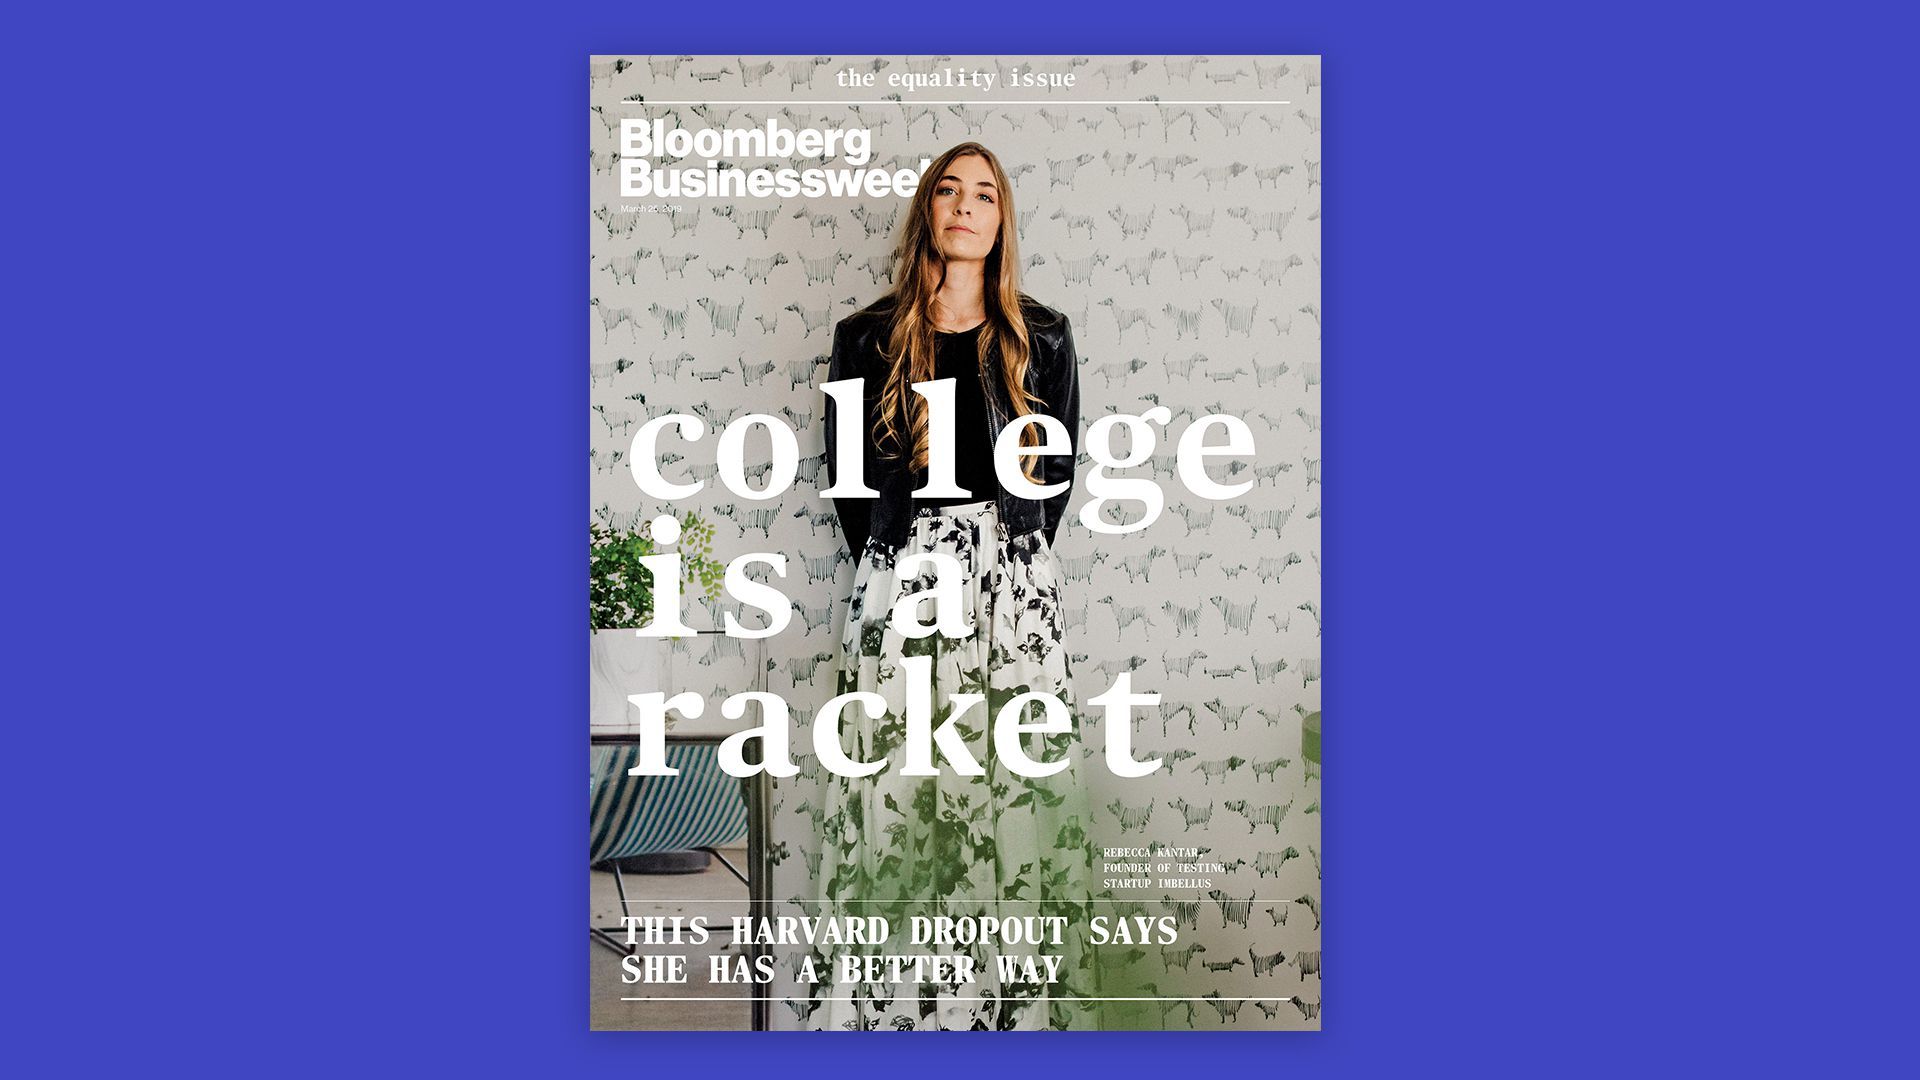 Cover of Bloomberg businessweek